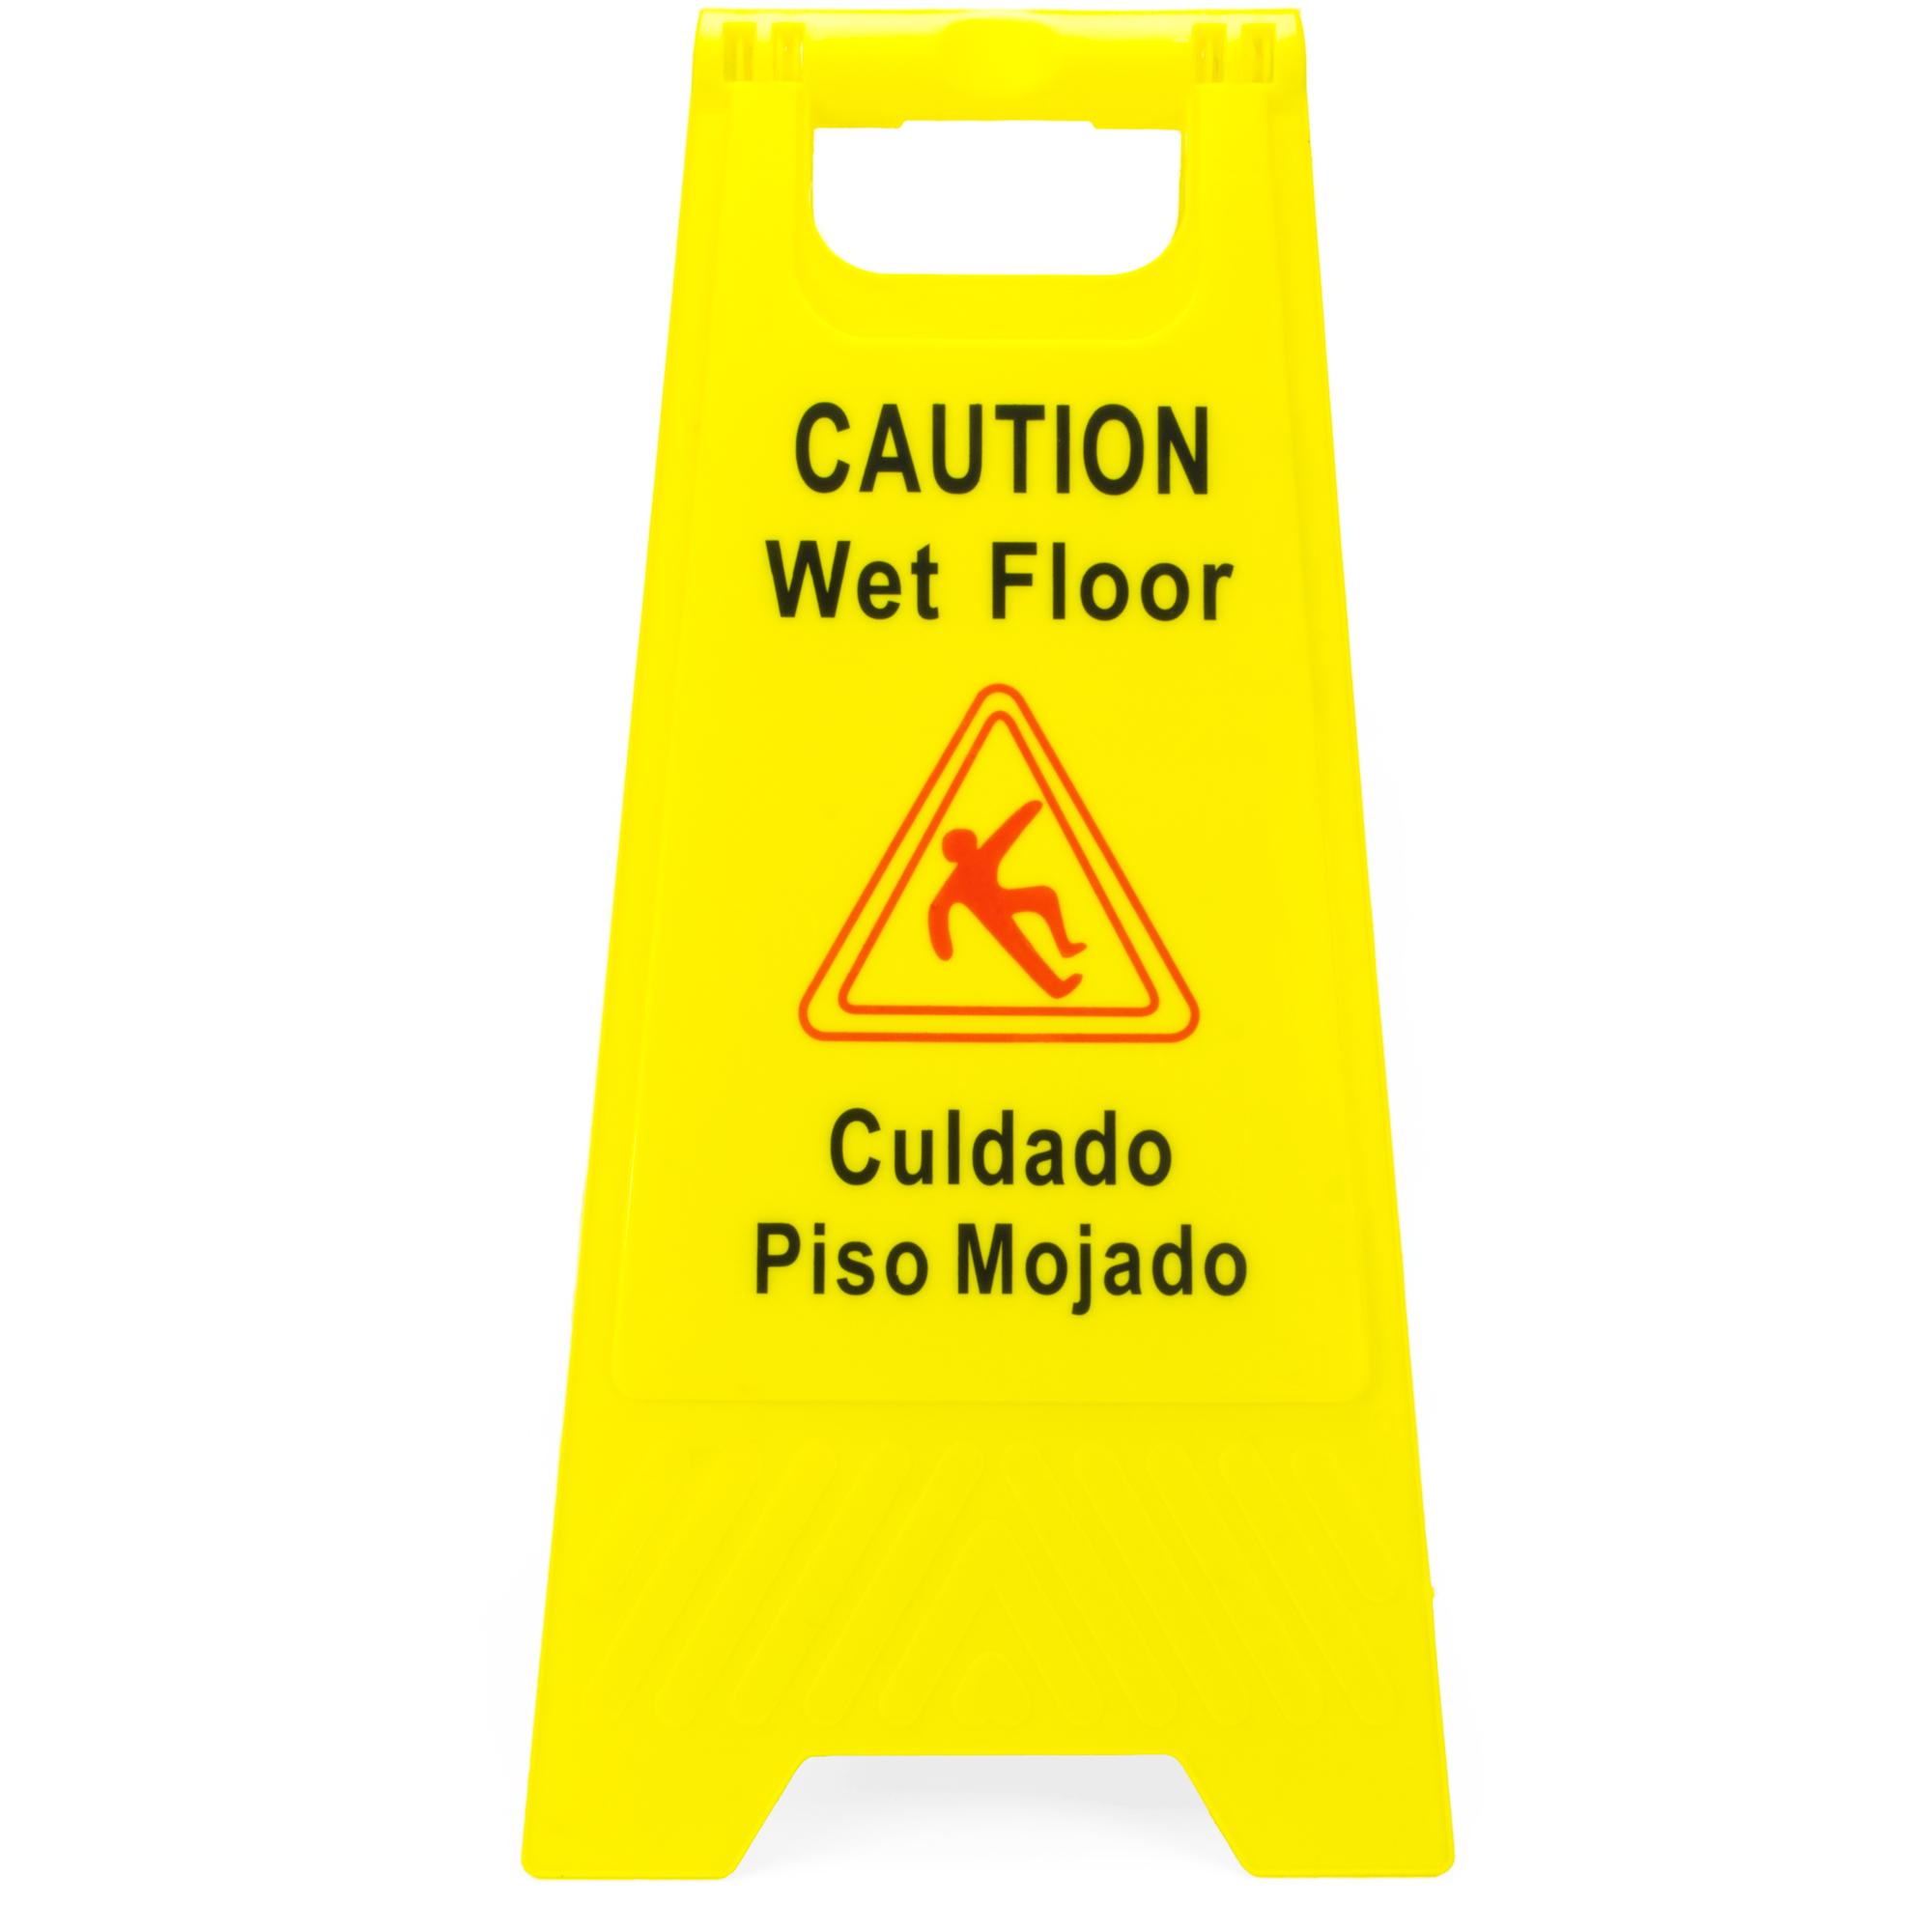 Caution Wet Floor Sign, English & Spanish